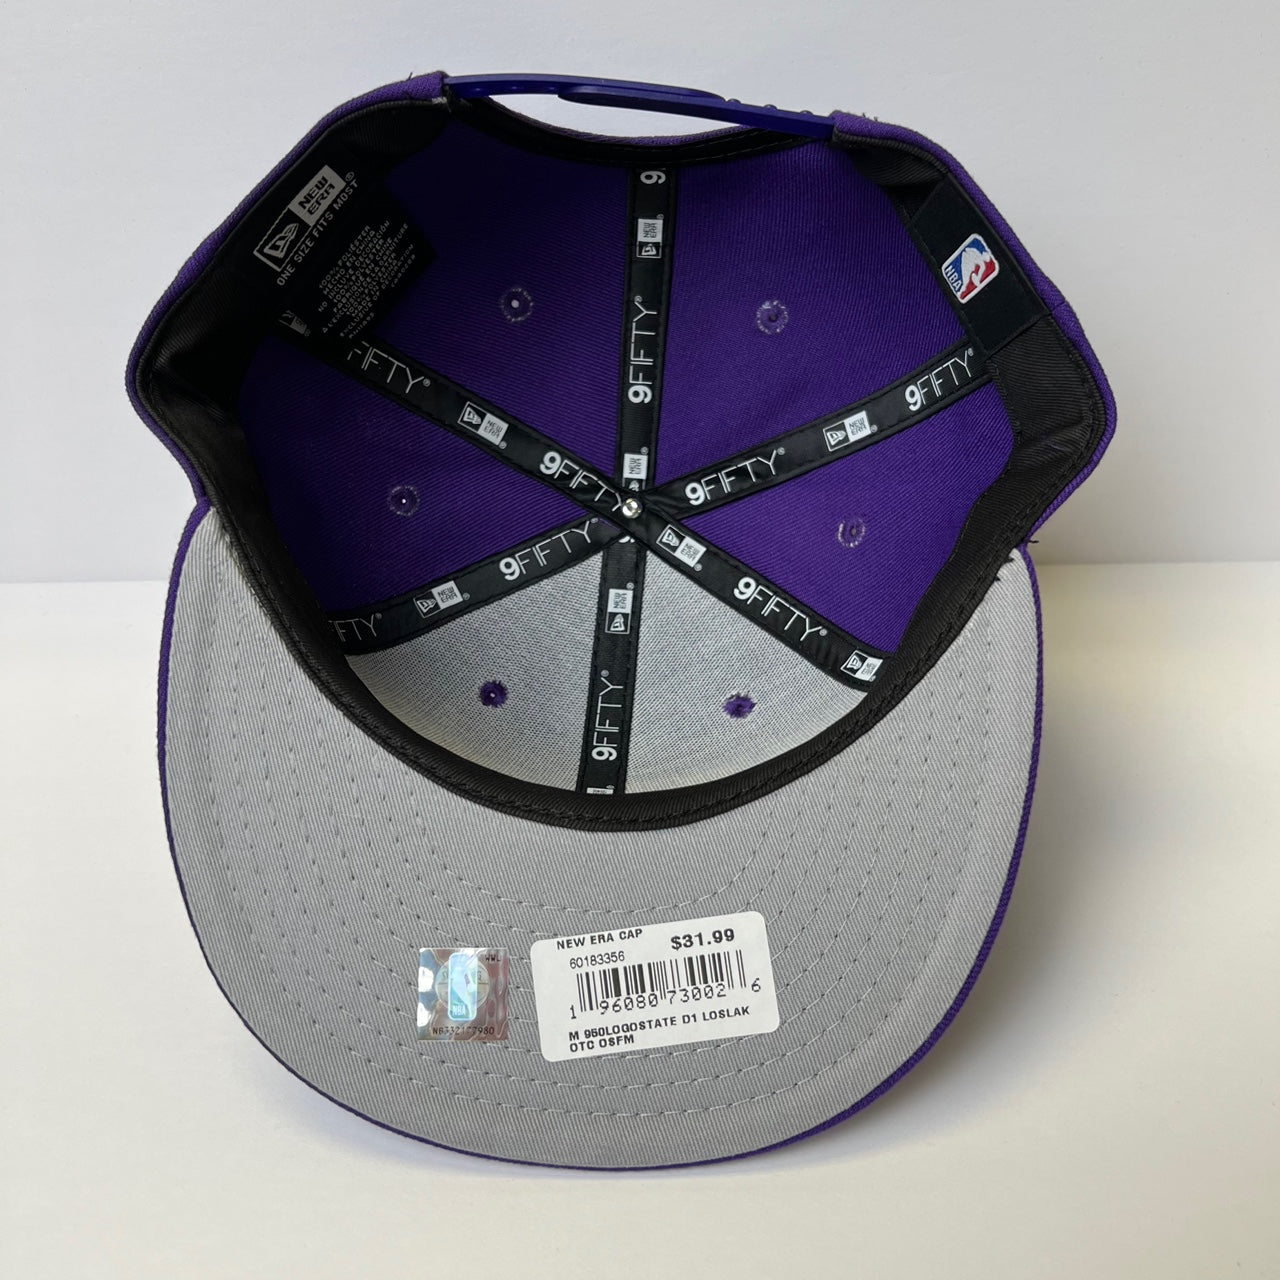 New Era LA LAKERS Purple 9FIFTY Snapback Hat